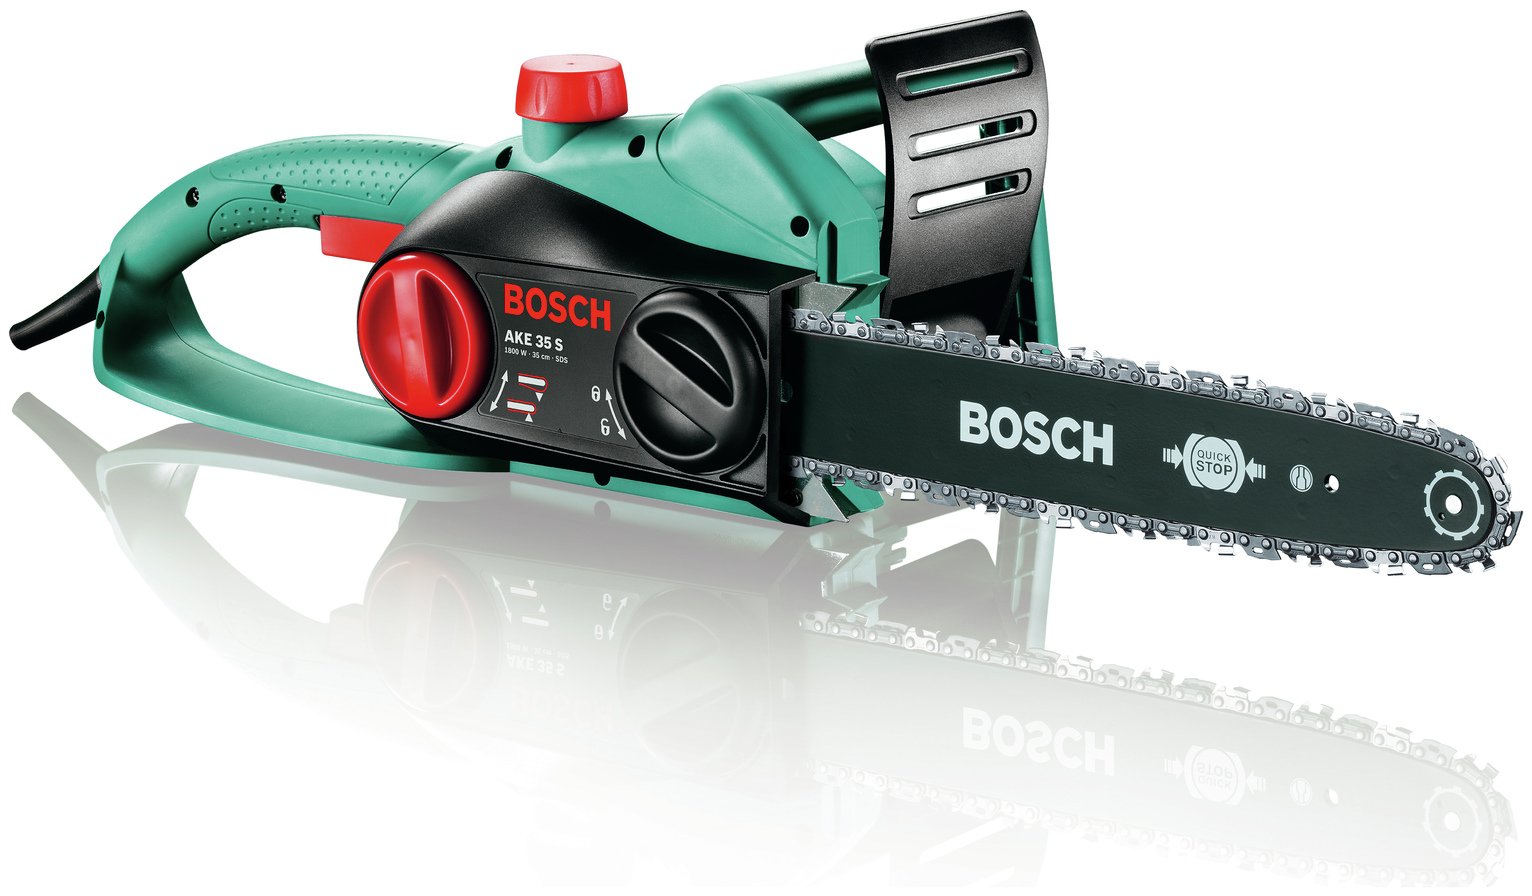 Bosch AKE 35 S 35cm Corded Chainsaw - 1800W